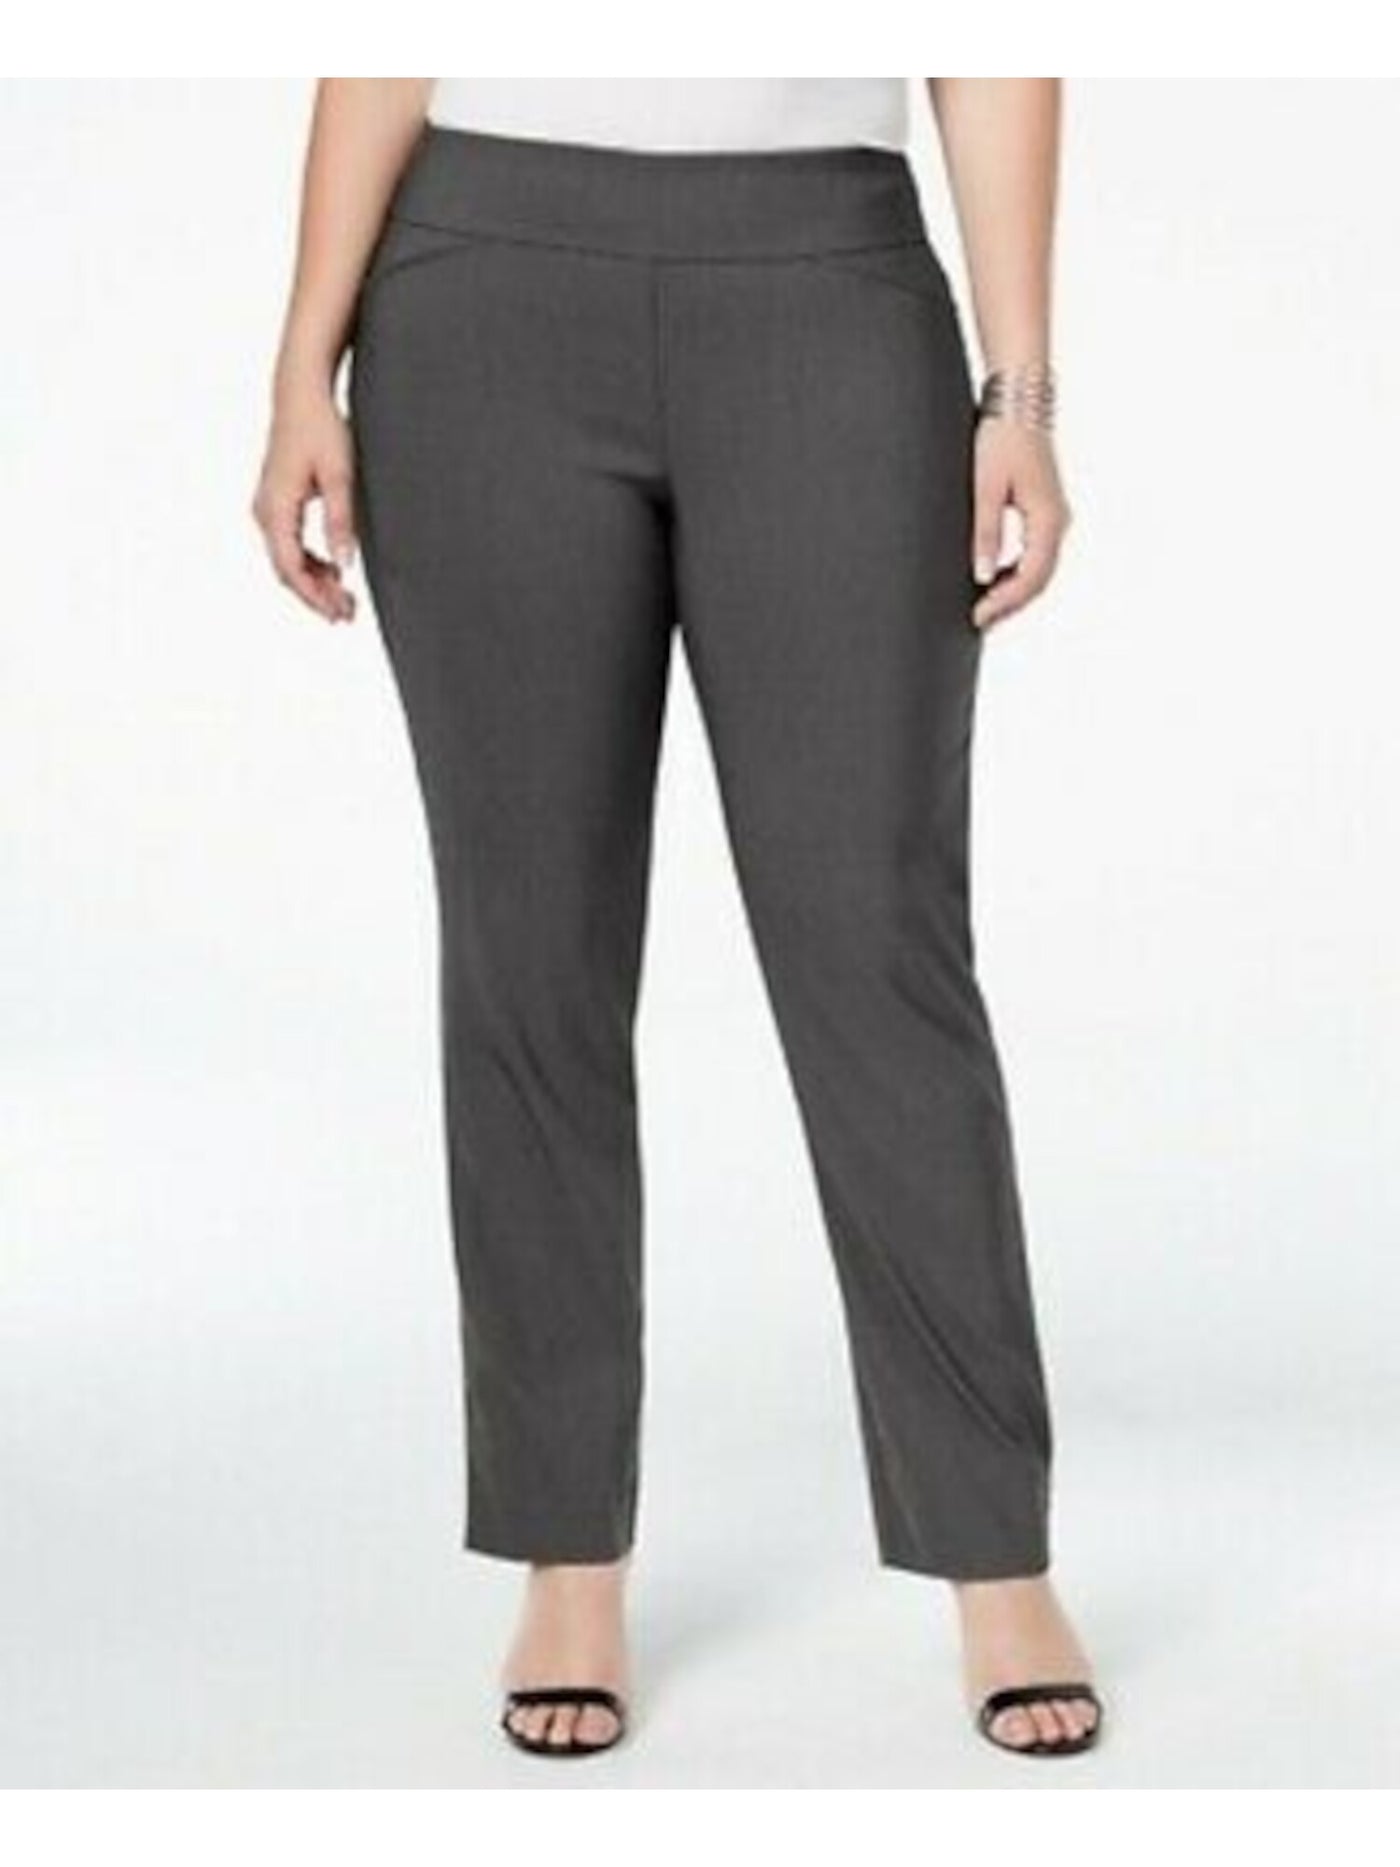 CHARTER CLUB Womens Gray Slim Pull-on Check Wear To Work Straight leg Pants Plus 24W